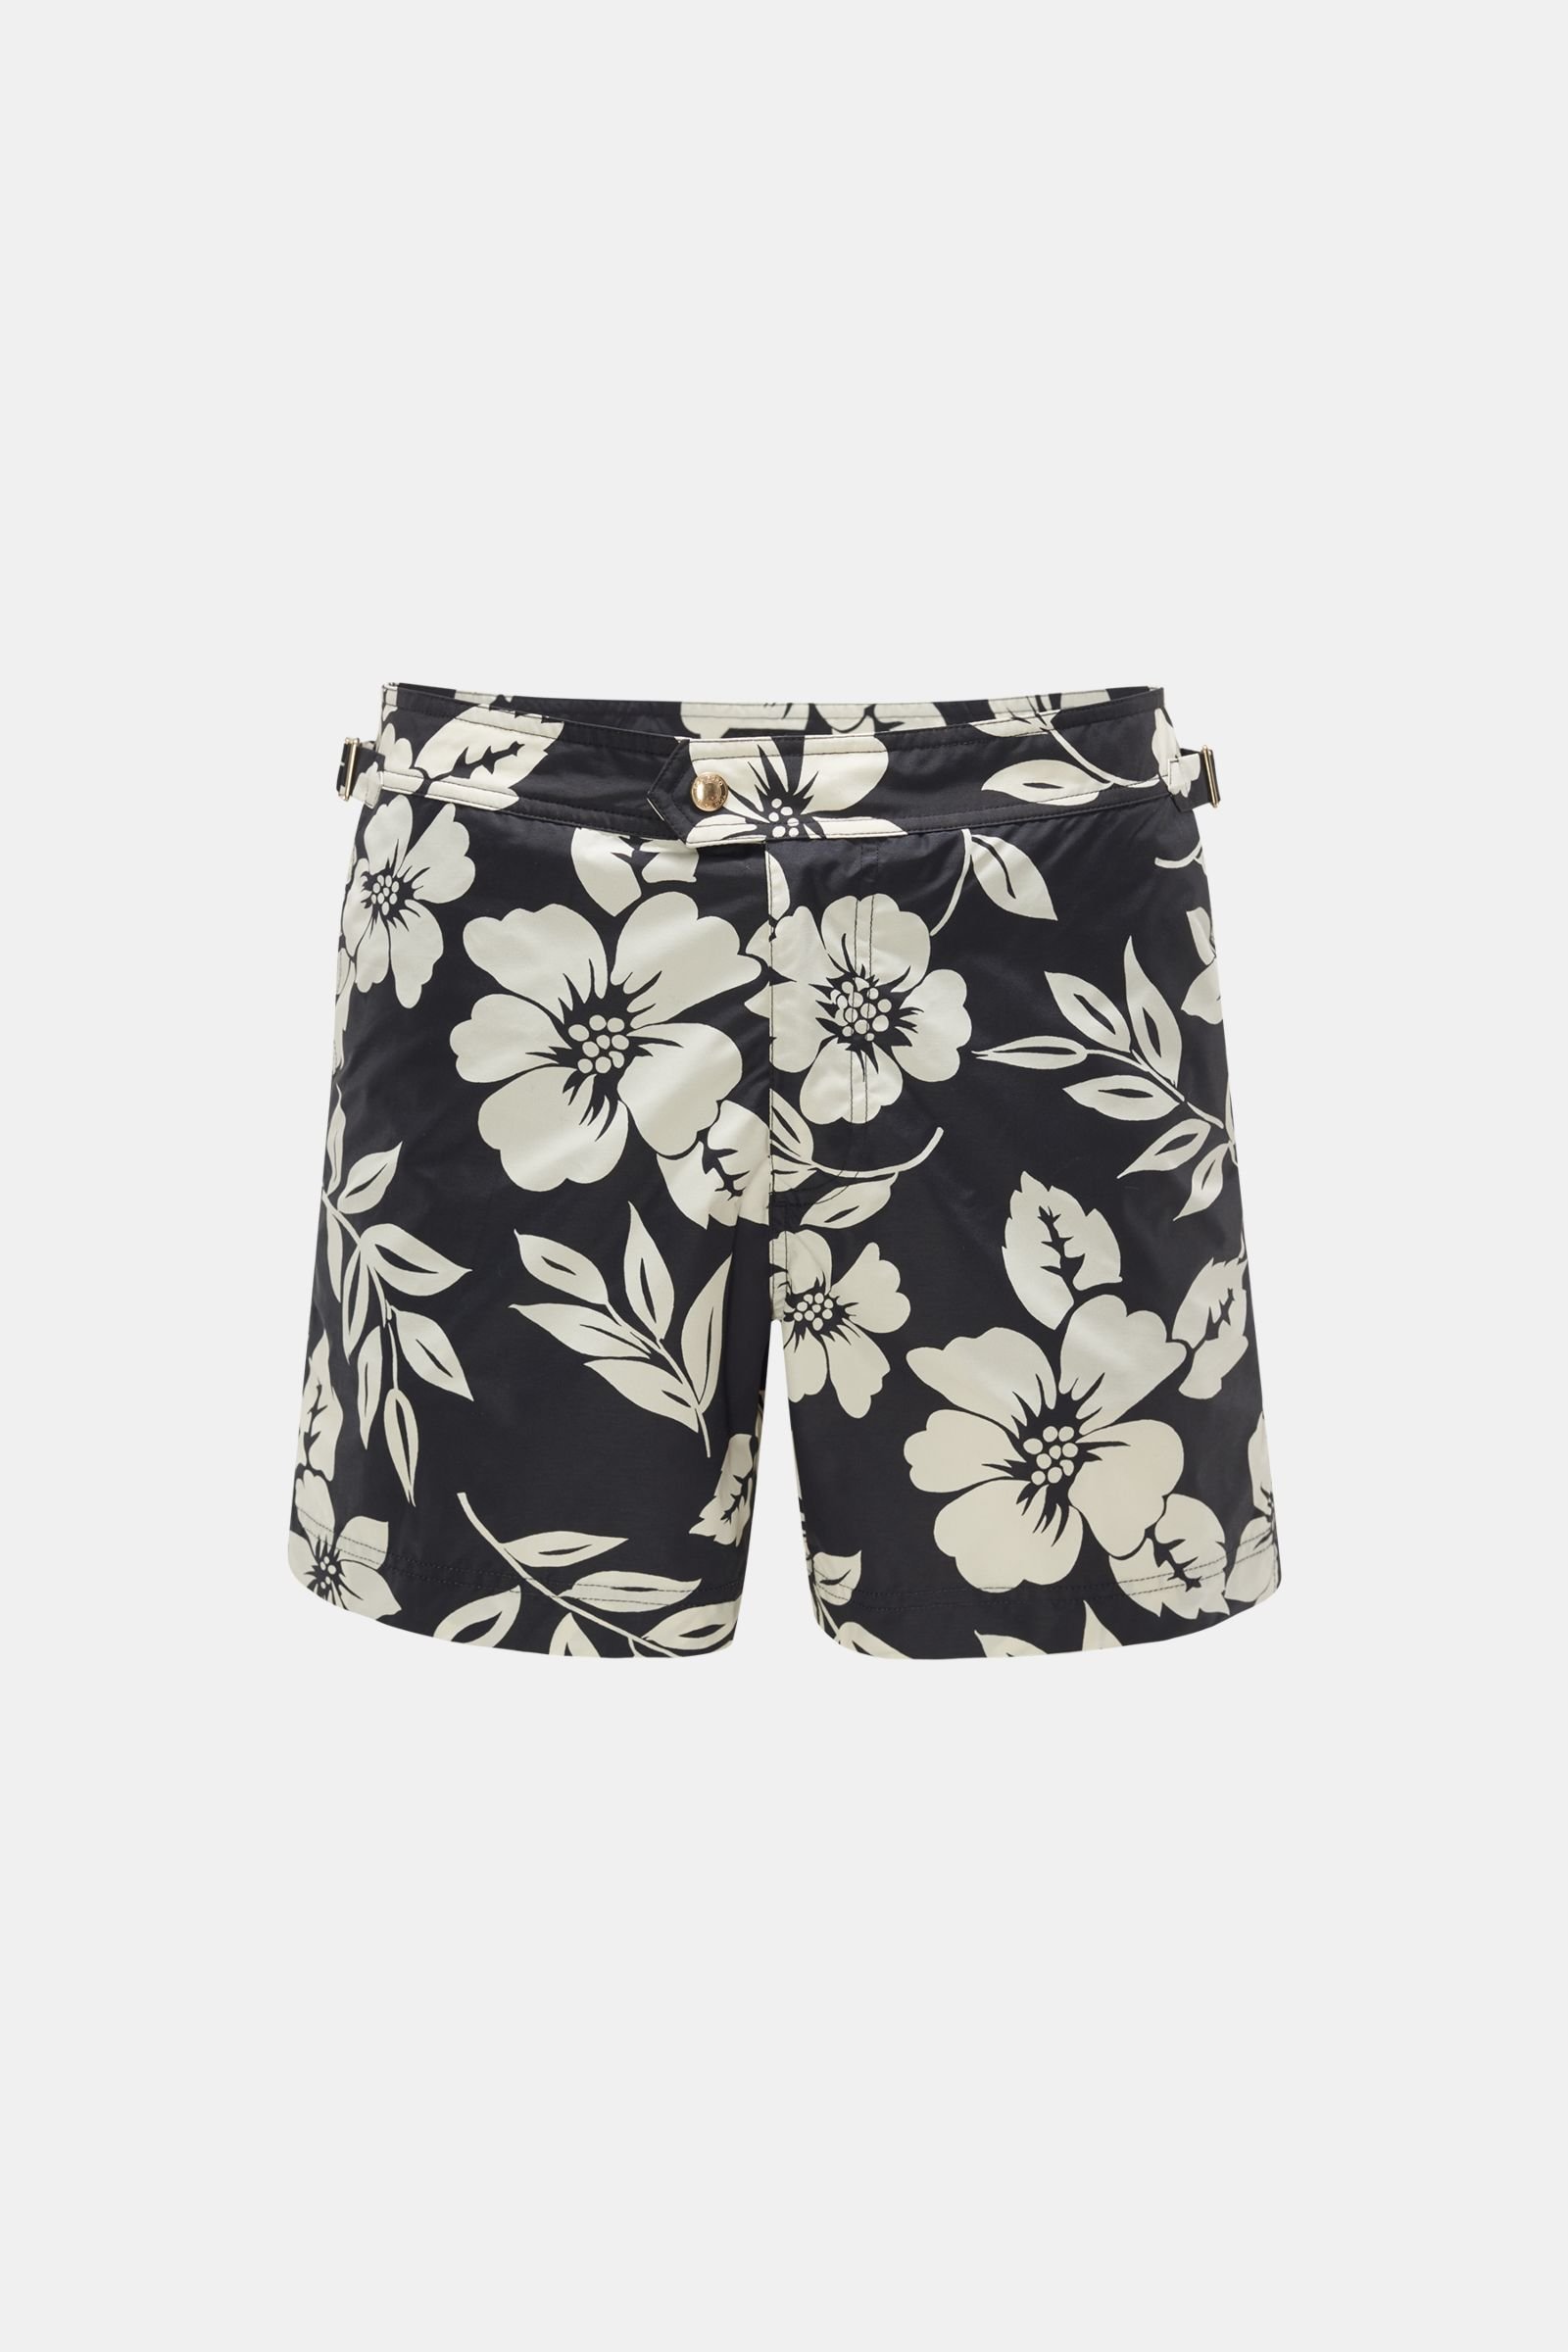 Swim shorts black/off-white patterned